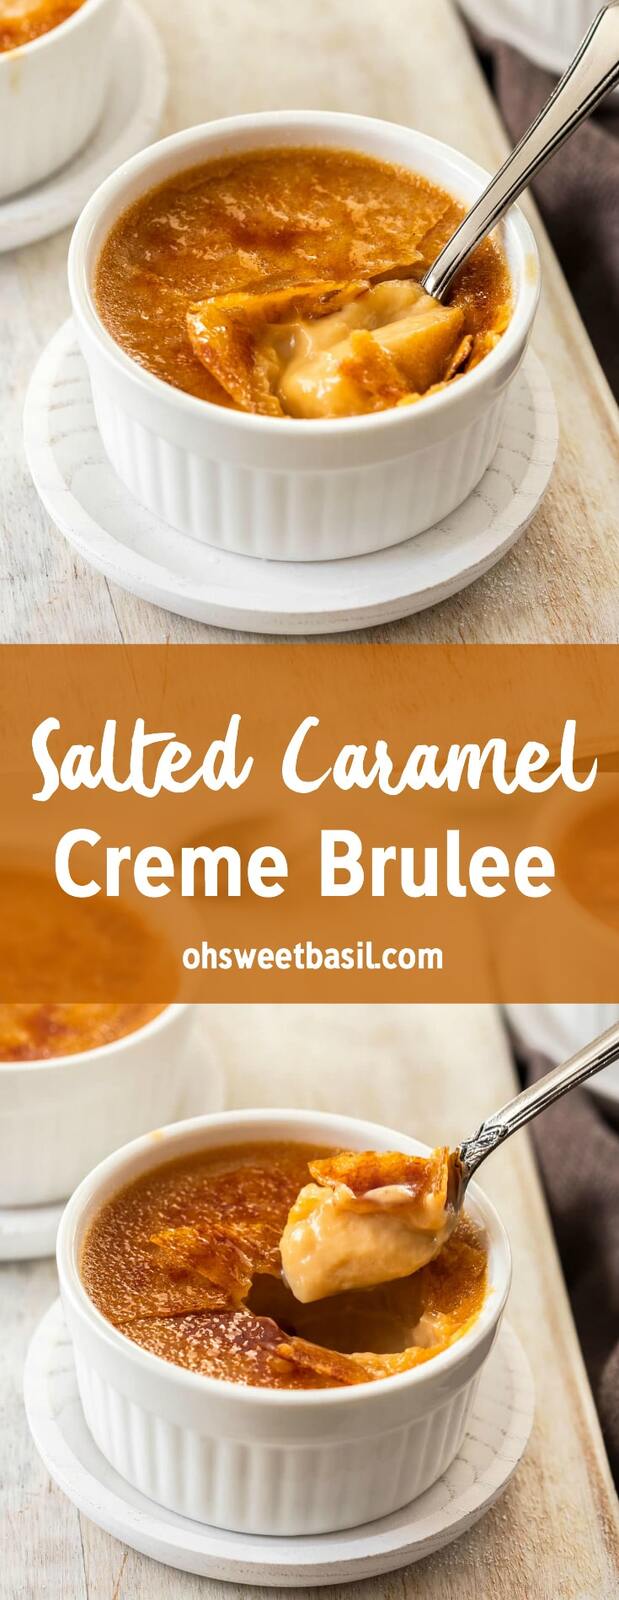 Salted-Caramel-Creme-Brulee-ohsweetbasil.com_.jpg